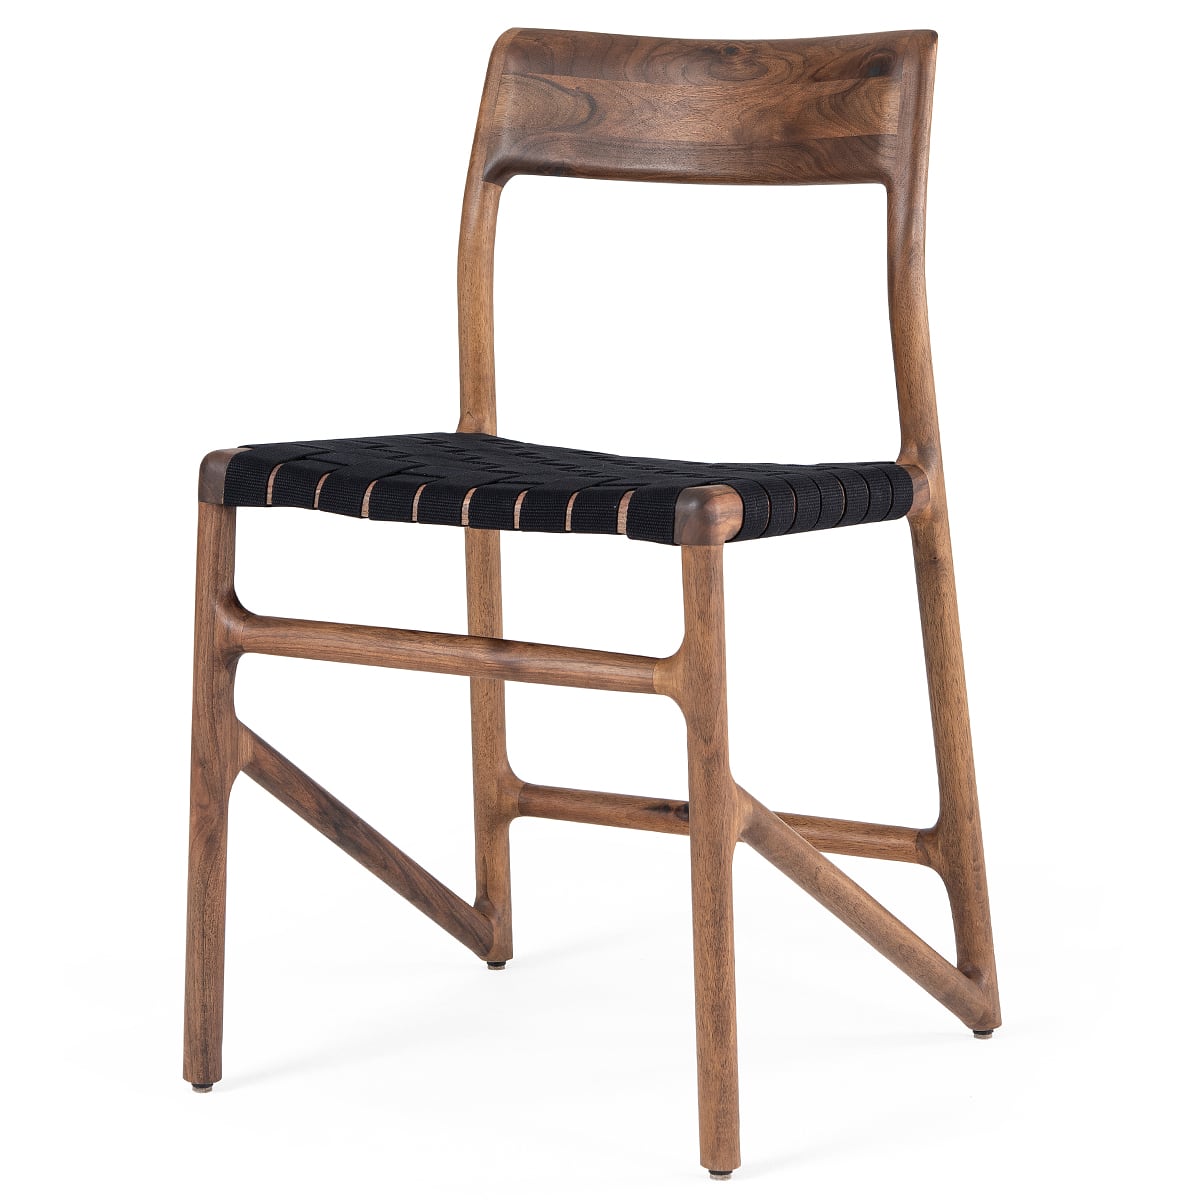 FAWN - stol - Solid valnøtt, naturlig oljet finish, bomullsbånd svart